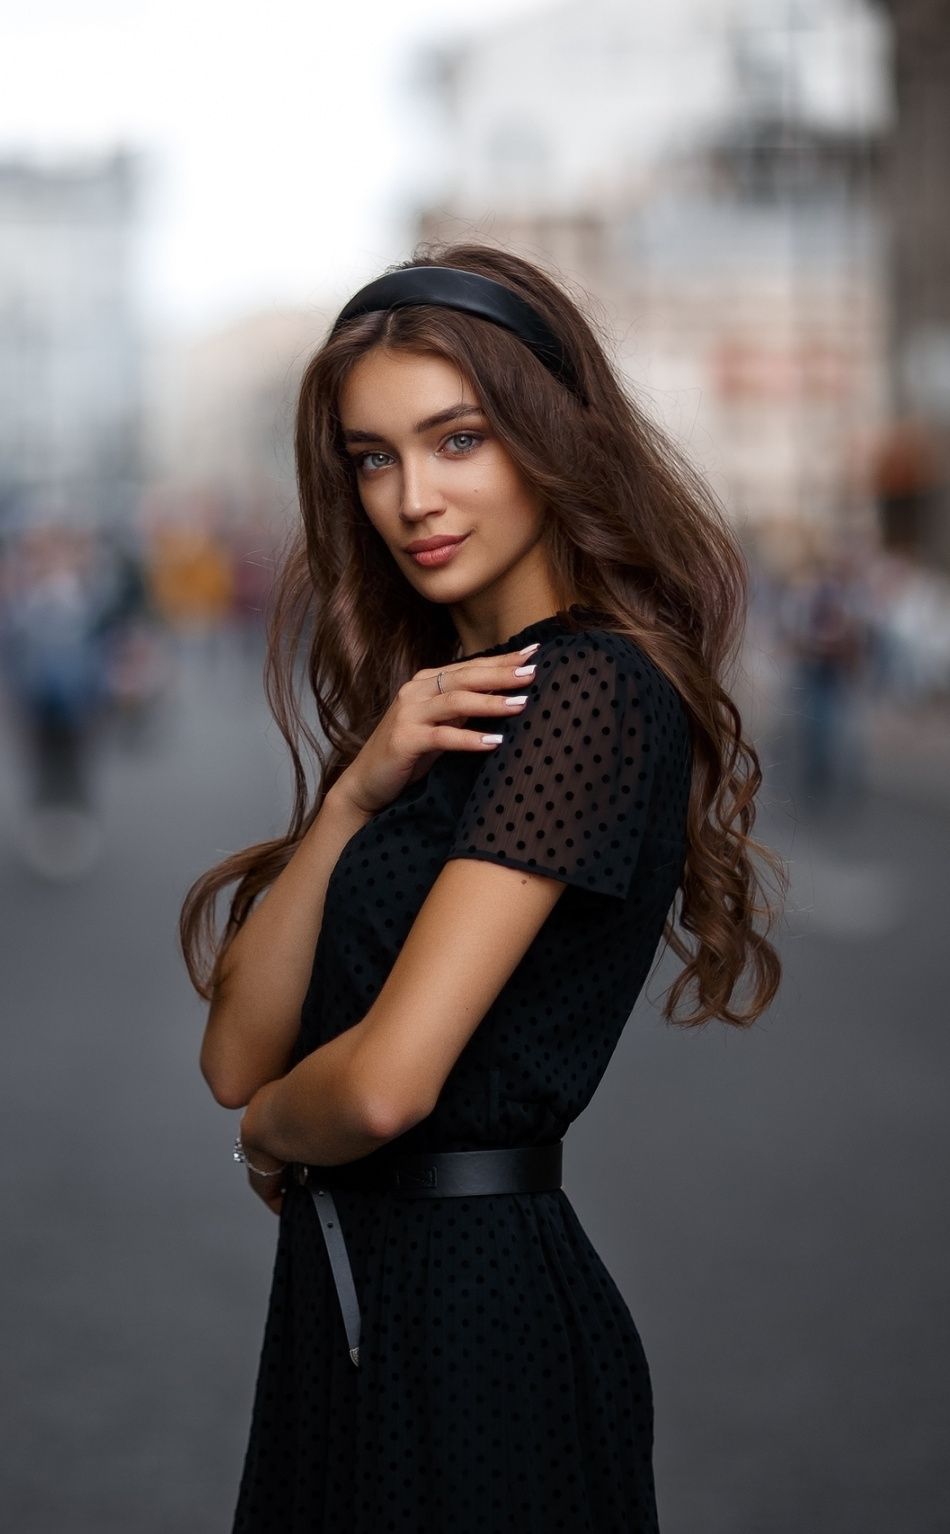 Black dress, pretty, long hair, woman model wallpaper. Women, Girl photography, Model